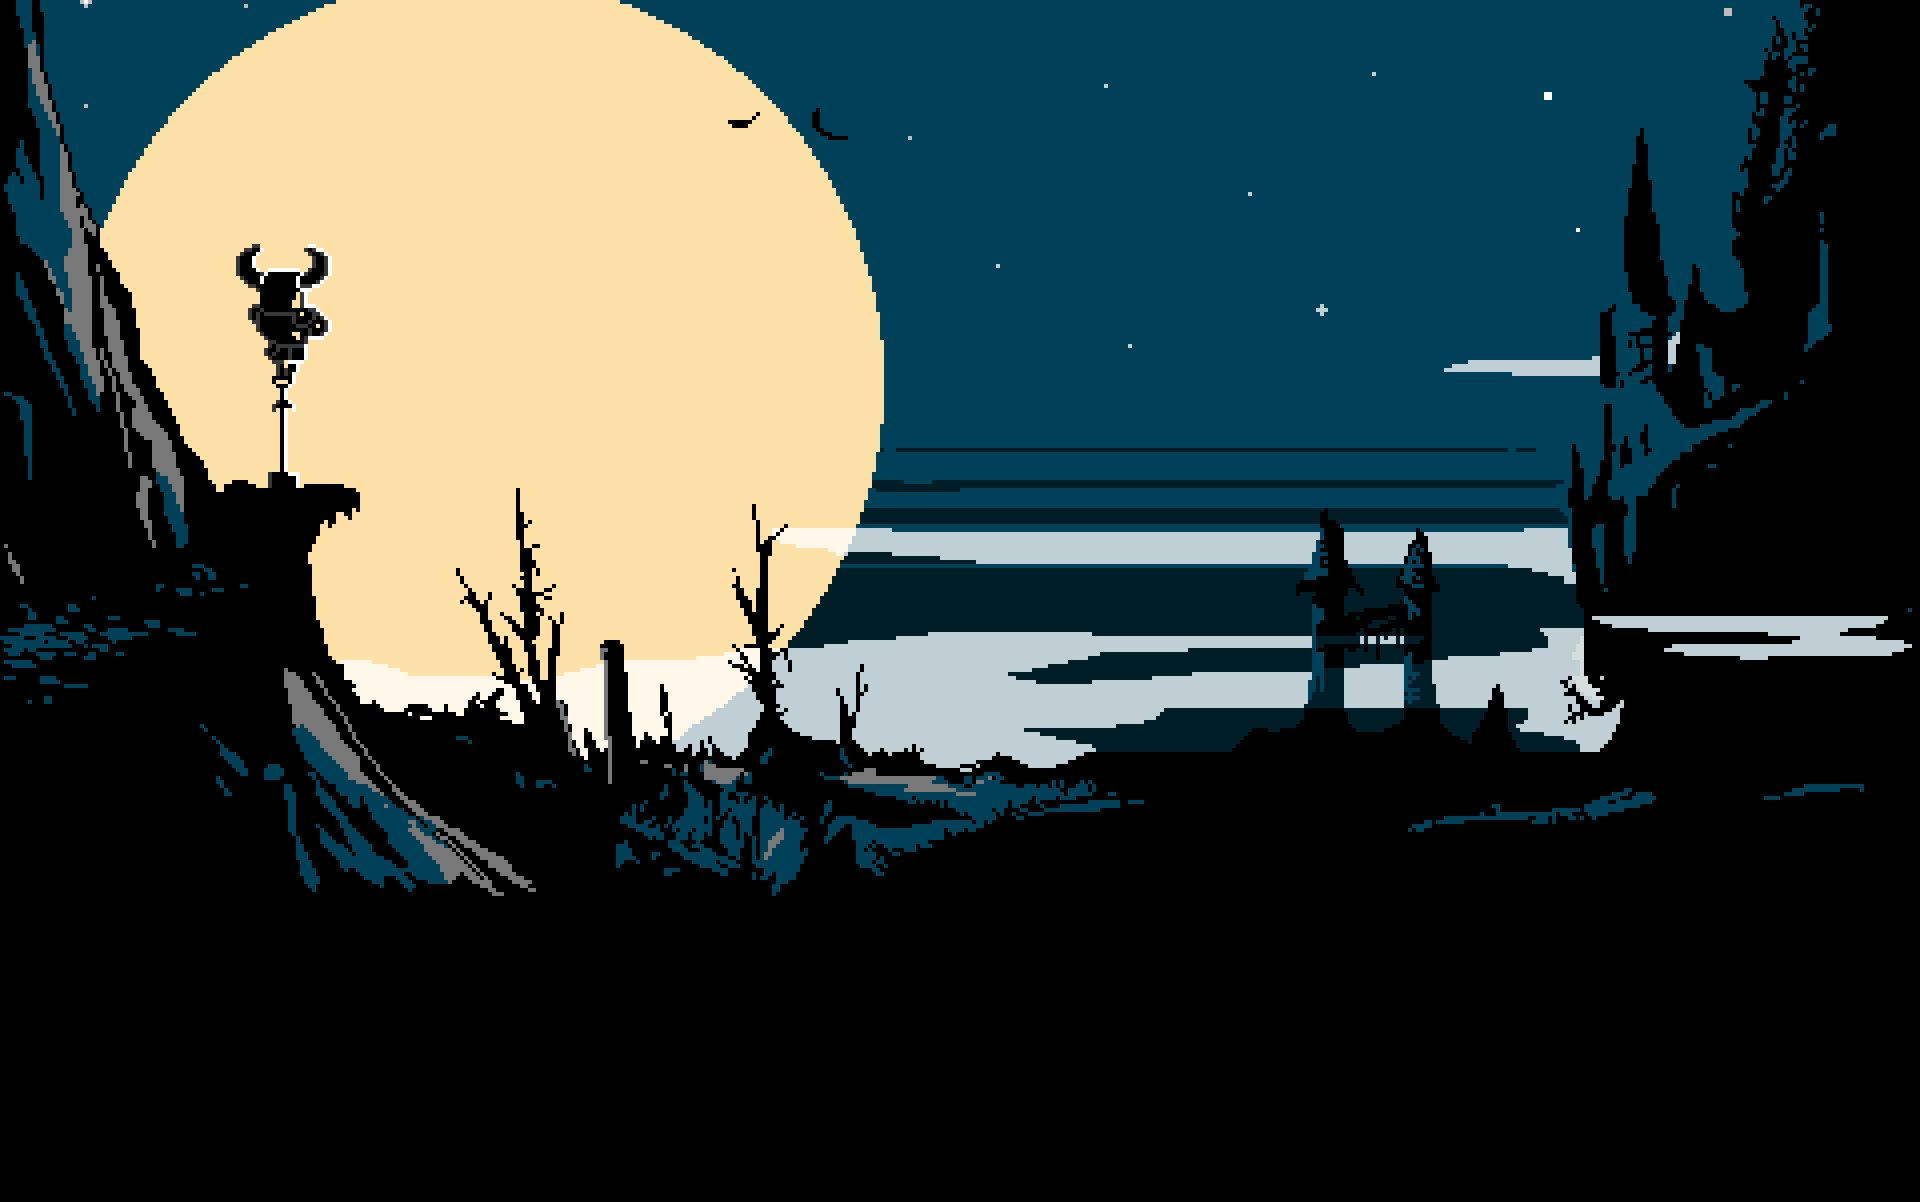 Shovel Knight gazing at the moon in a serene night landscape Wallpaper